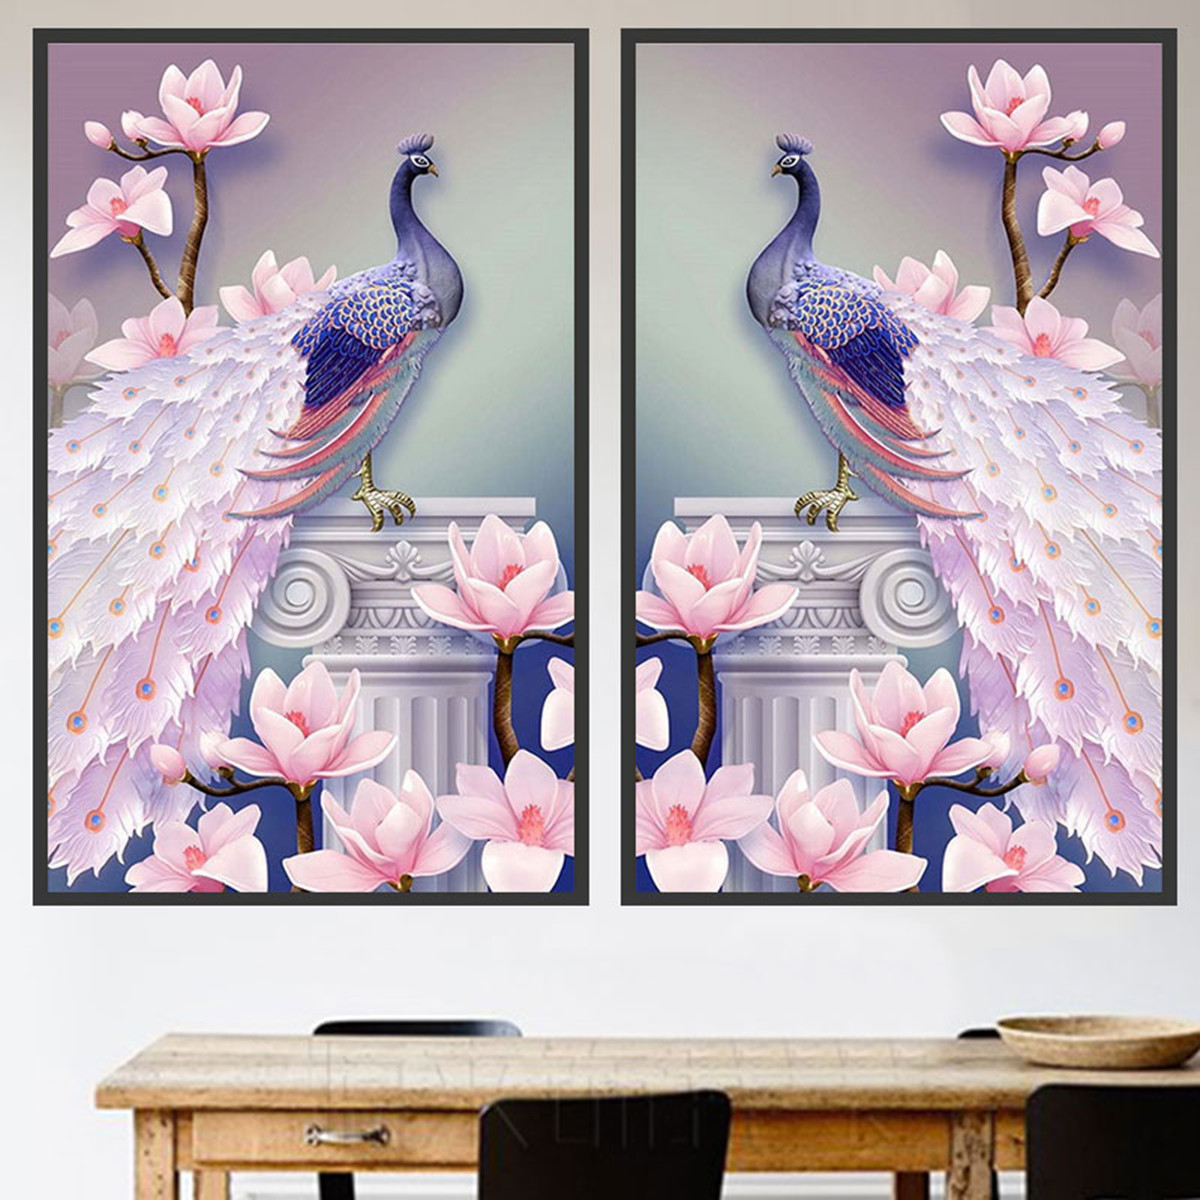 DIY-5D-Diamond-Painting-Magnolia-Peacock-Art-Craft-Embroidery-Stitch-Kit-Handmade-Wall-Decorations-G-1285865-1